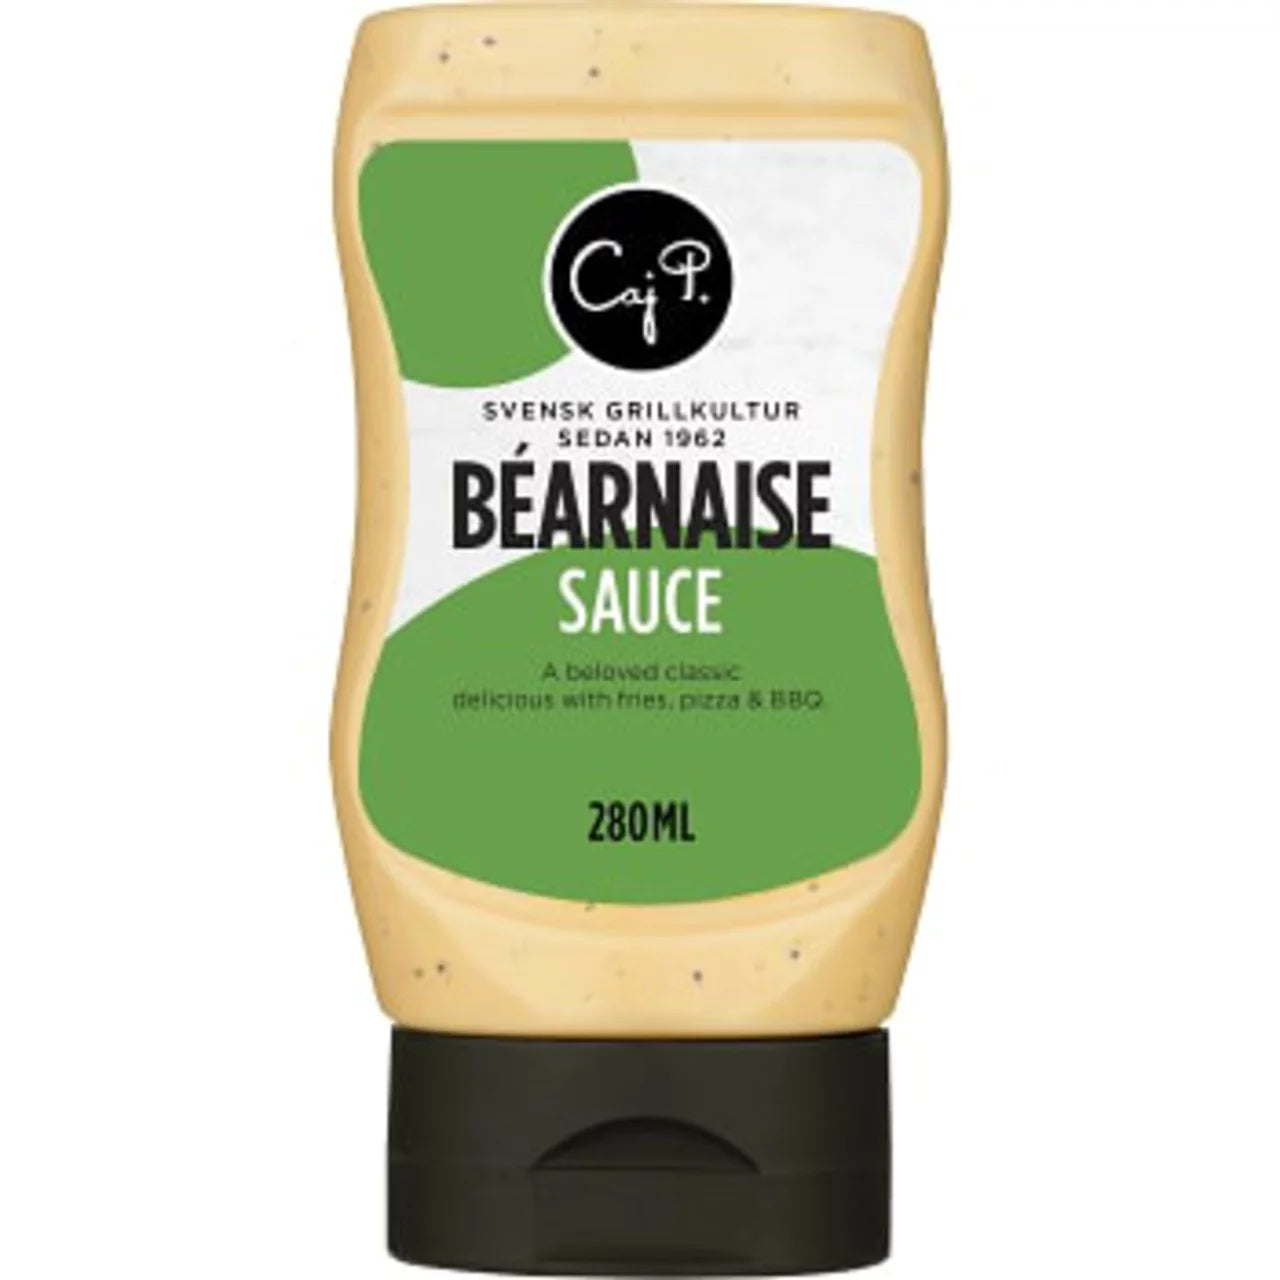 Swedish Bearnaise Sauce - Bearnaise Sauce Caj P 280ml